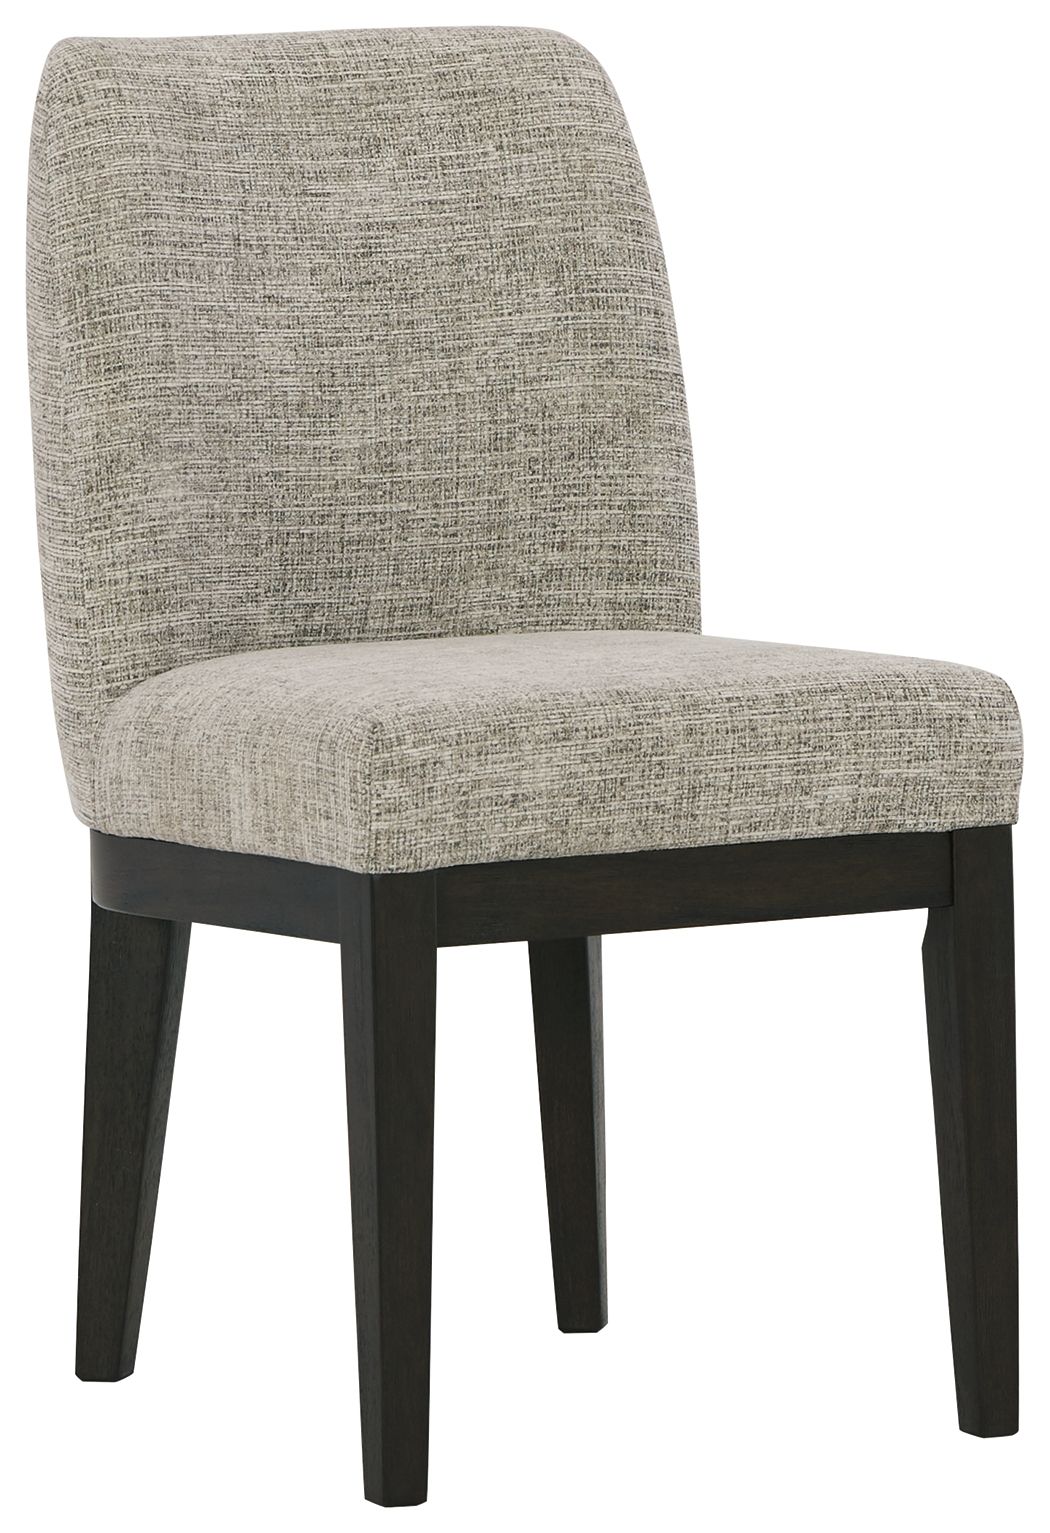 Burkhaus - Beige / Dark Brown - Dining Uph Side Chair (Set of 2) - Tony's Home Furnishings